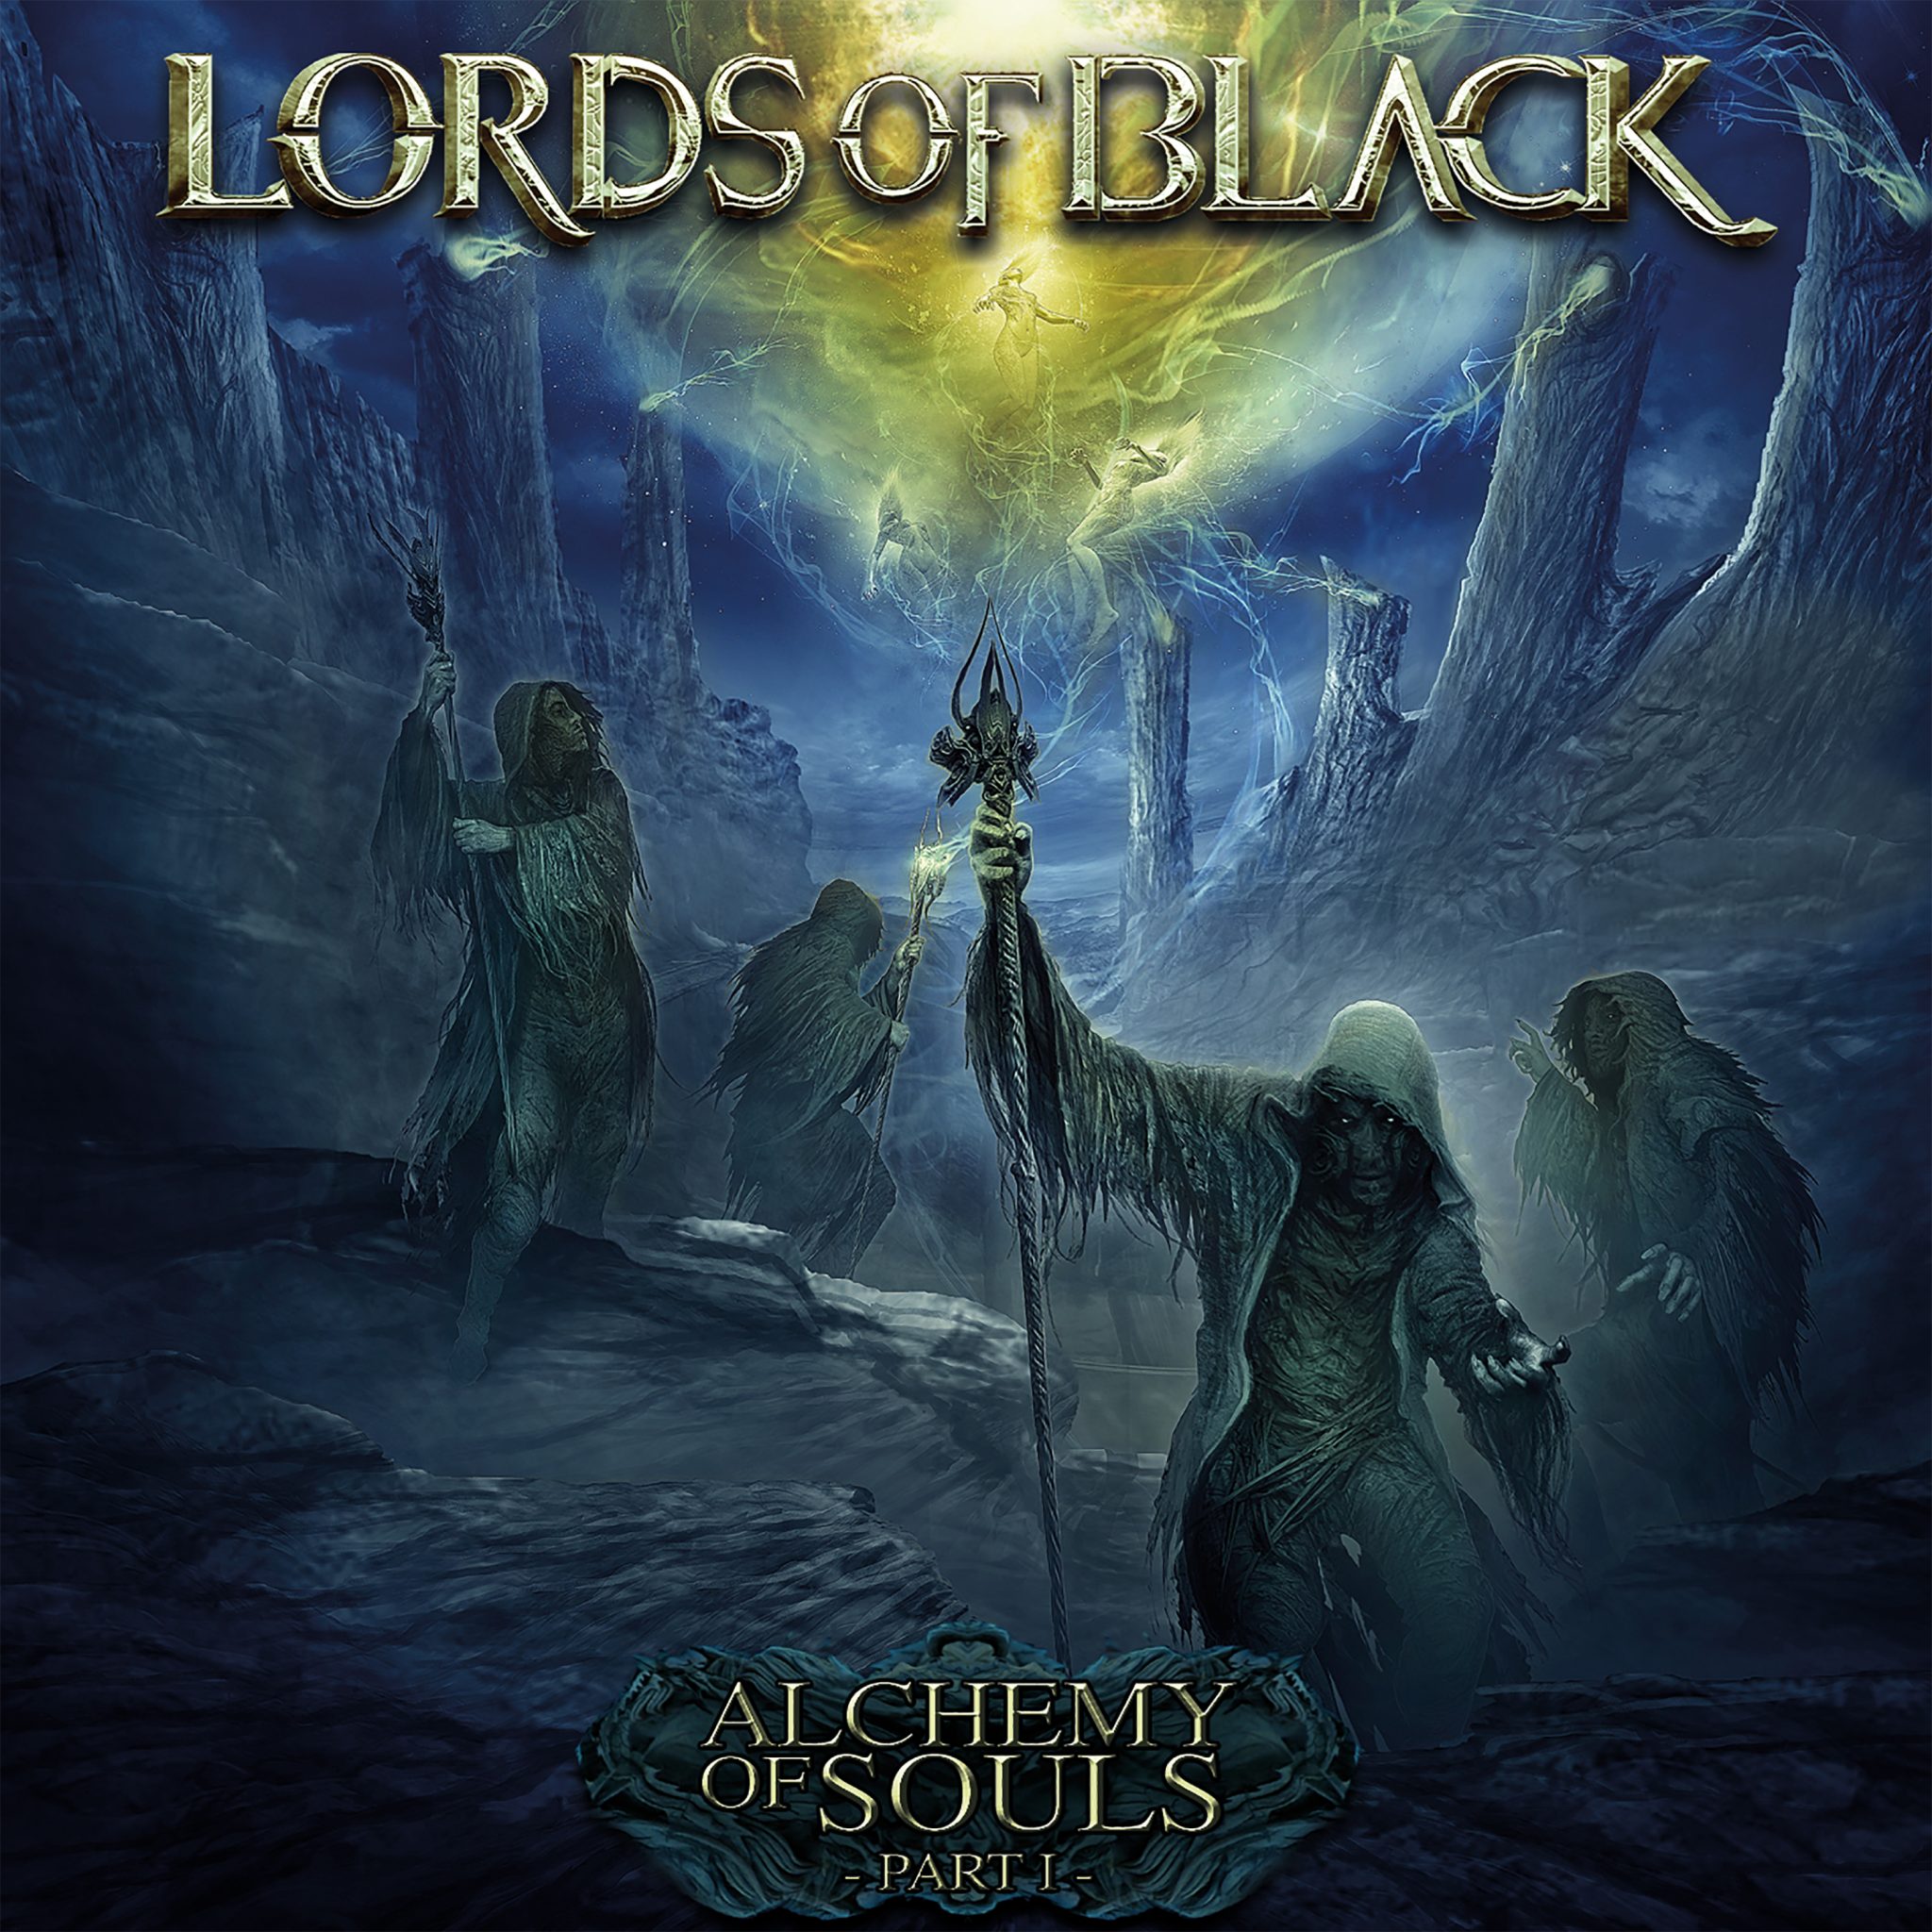 Lords of black mechanics of predacity. Lords of Black - Alchemy of Souls, pt. I - (2020). Lords of Black Alchemy of Souls Part 2. Lords of Black Alchemy of Souls Part 1. Lords of Black - Alchemy of Souls, pt. II (2021).